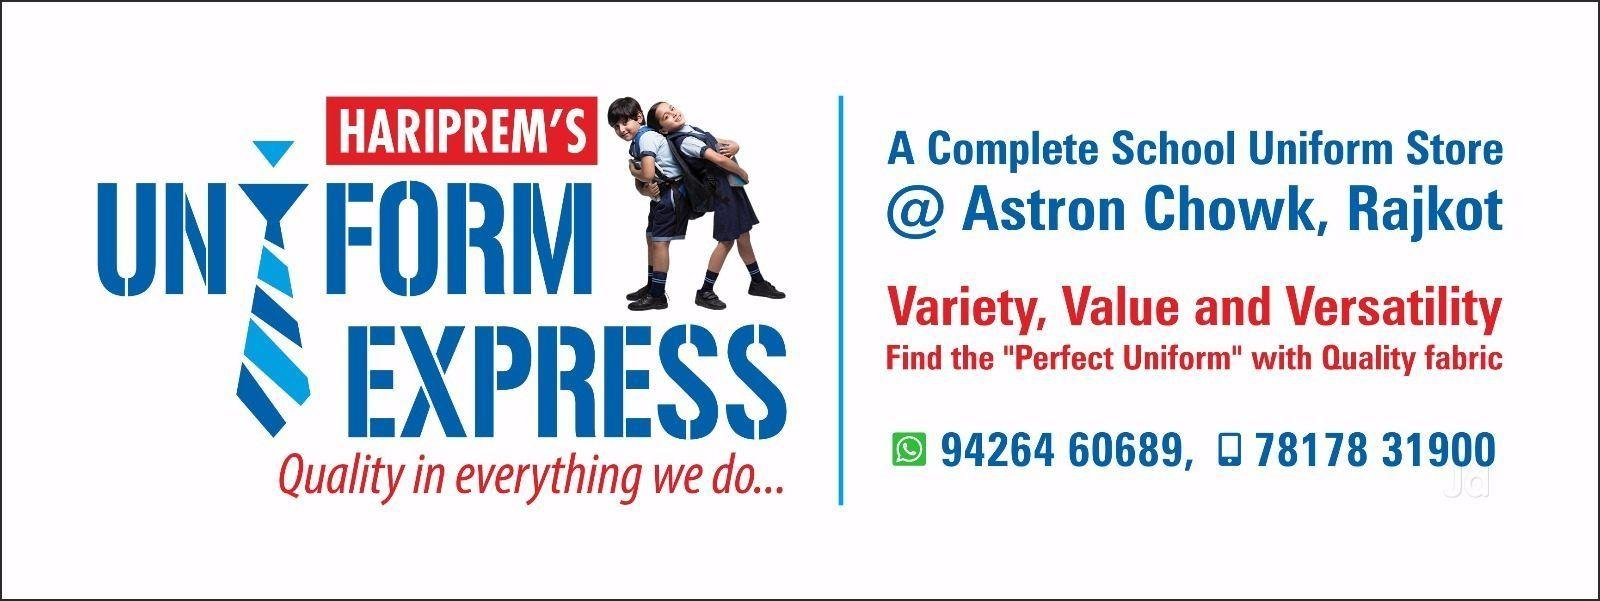 School Uniforms Express Logo - Uniform Express Photo, Astron Chowk, Rajkot- Picture & Image